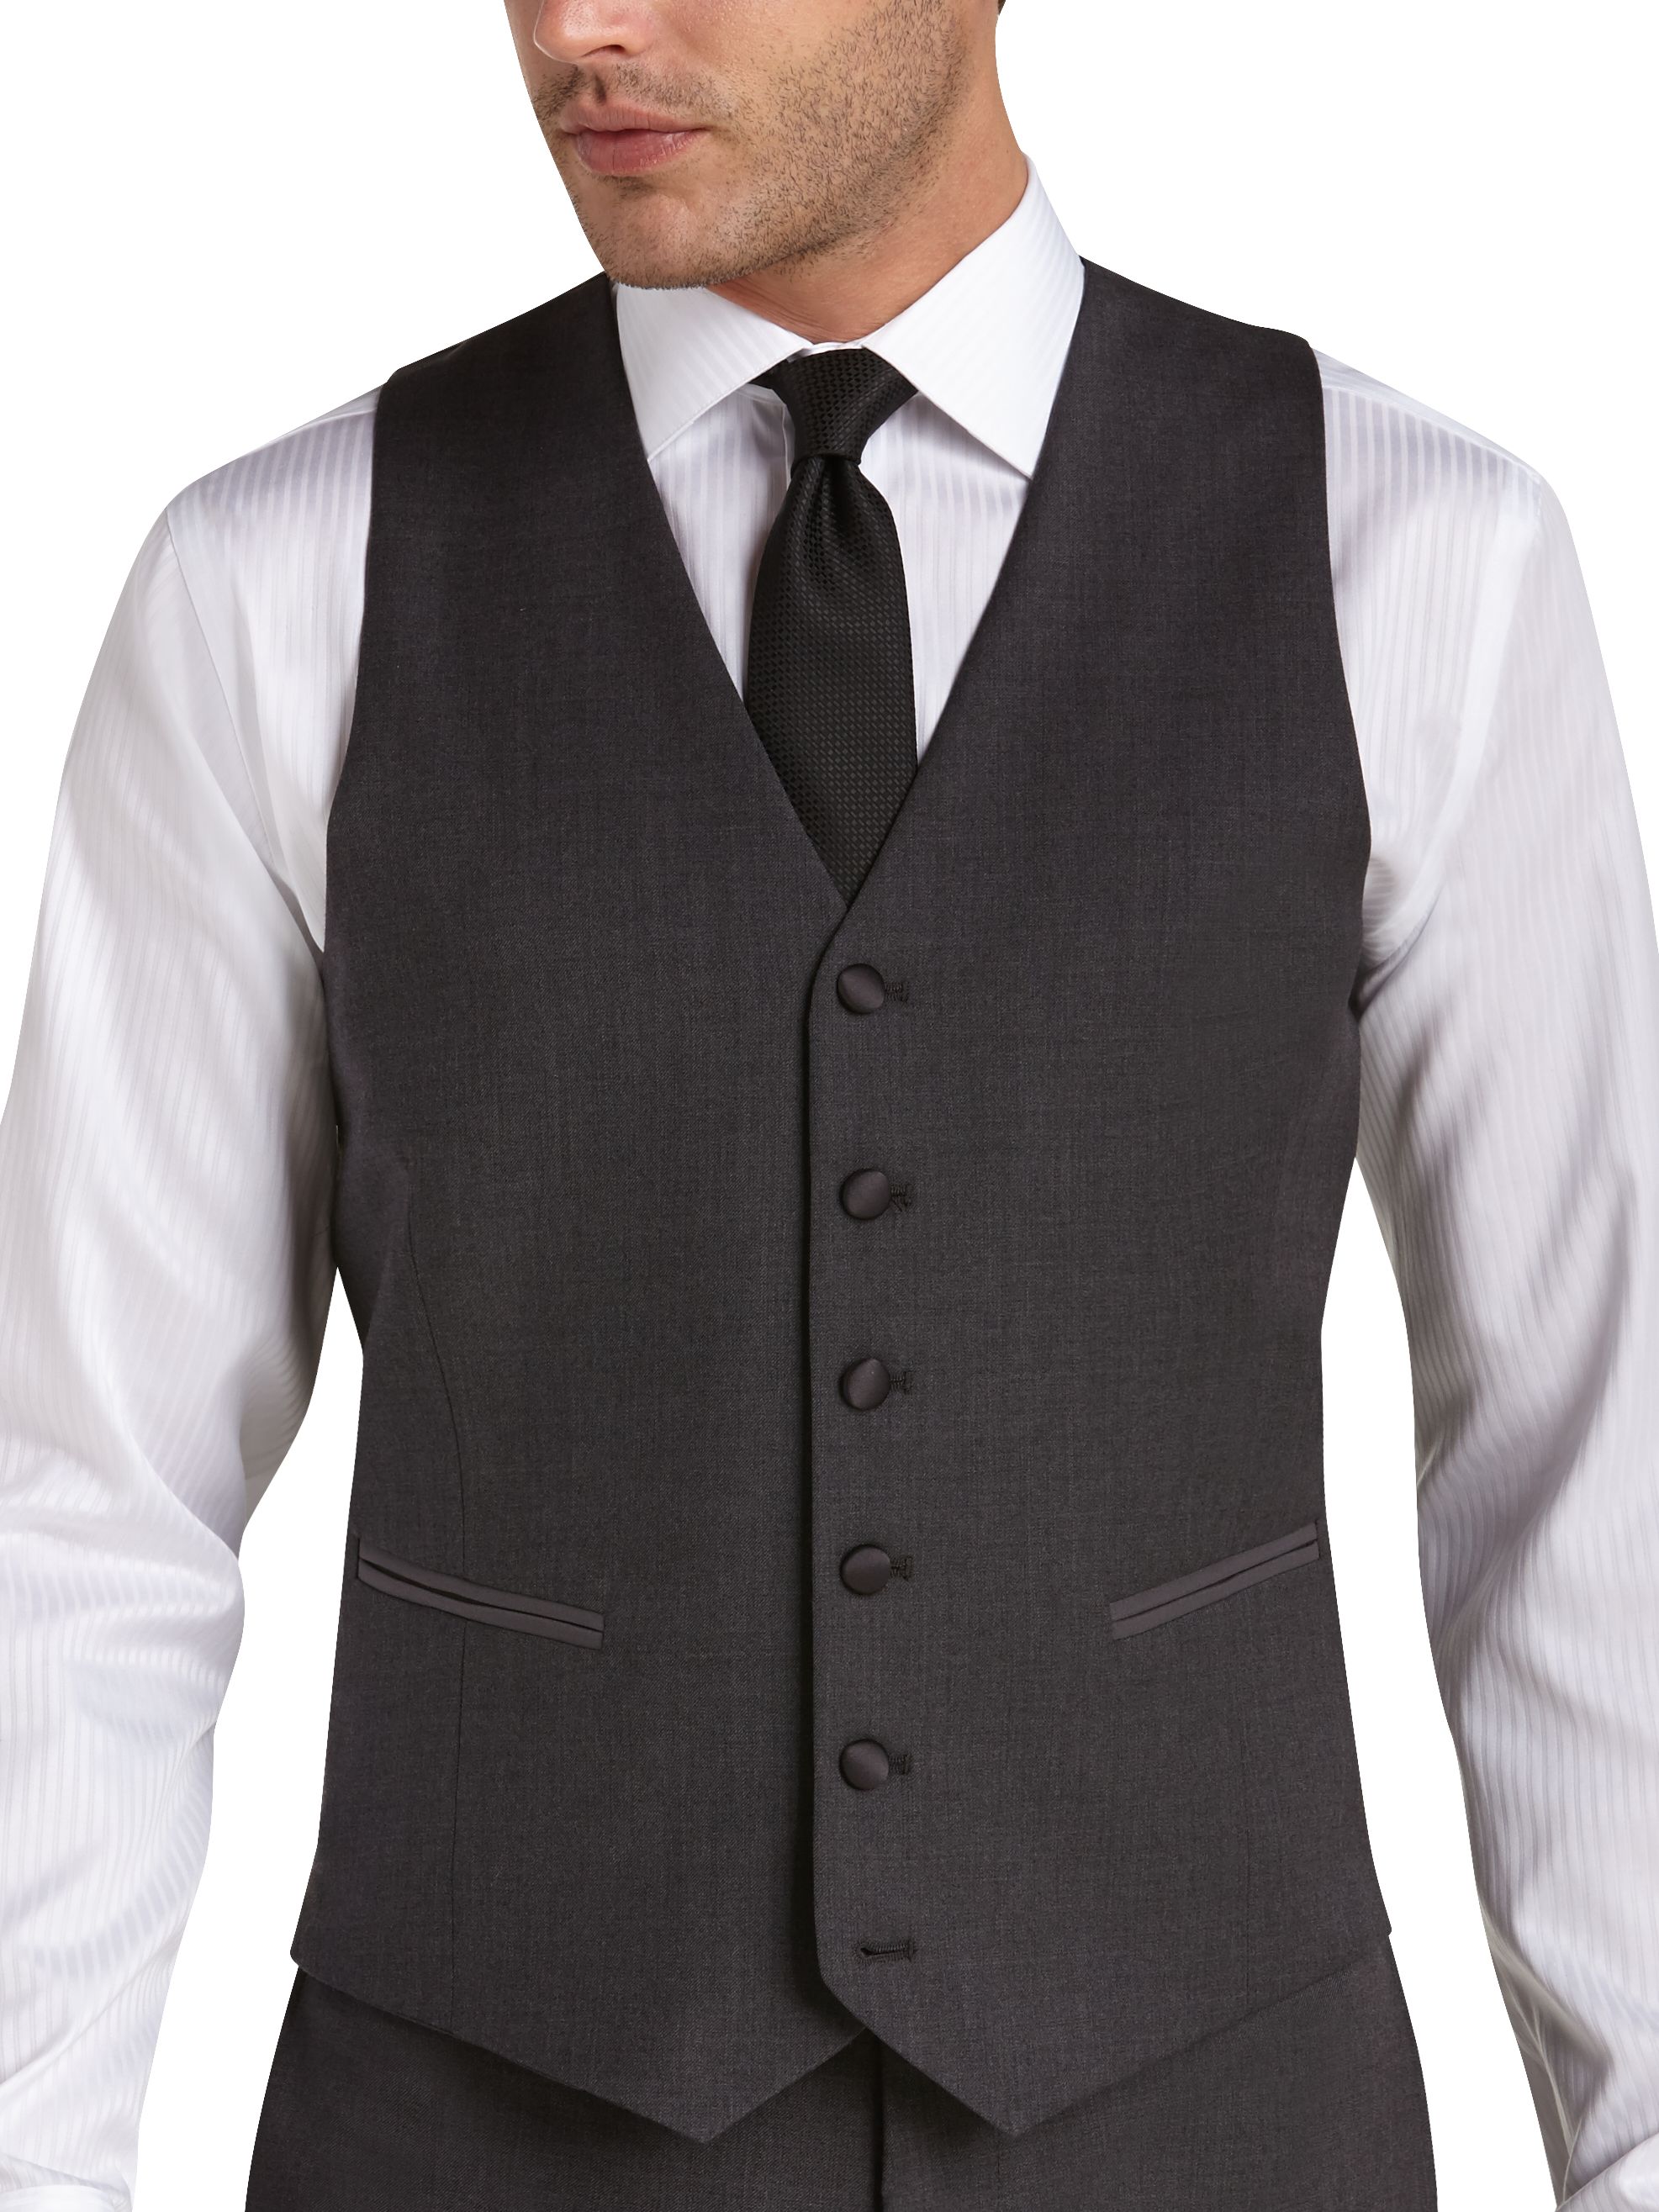 BLACK by Vera Wang Charcoal Slim Fit Tuxedo Vest - Men's Slim Fit | Men ...